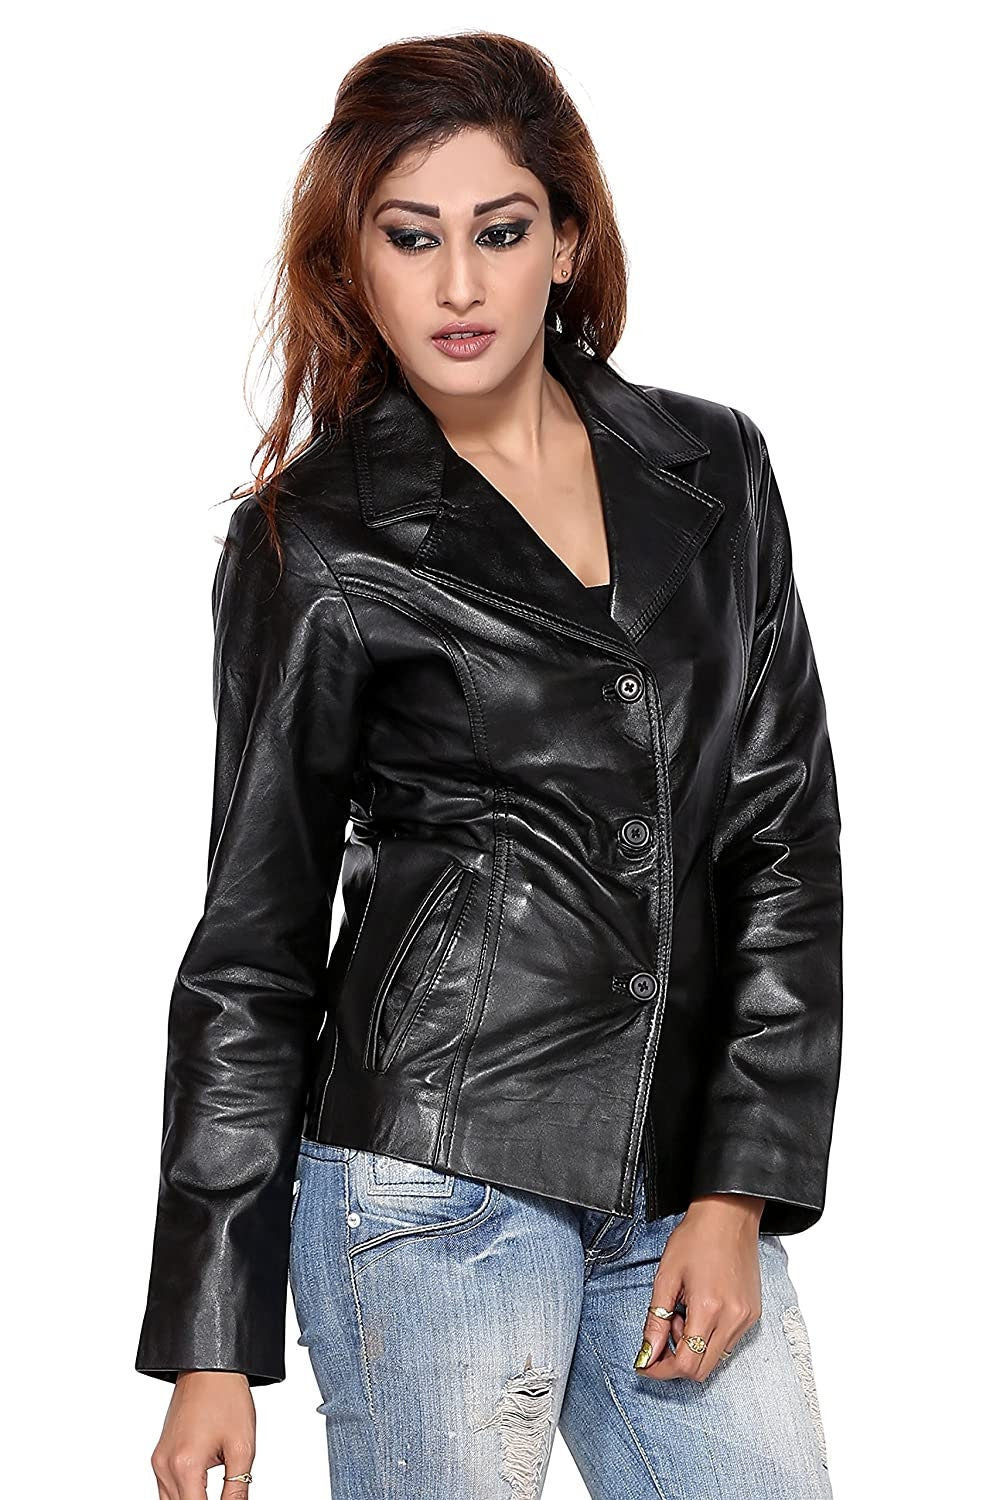 LINDSEY STREET Custom Made Genuine Leather Jacket for Women Stylish Slim Fit Leather Jacket Biker Casual Long Jacket Long Leather Blazer